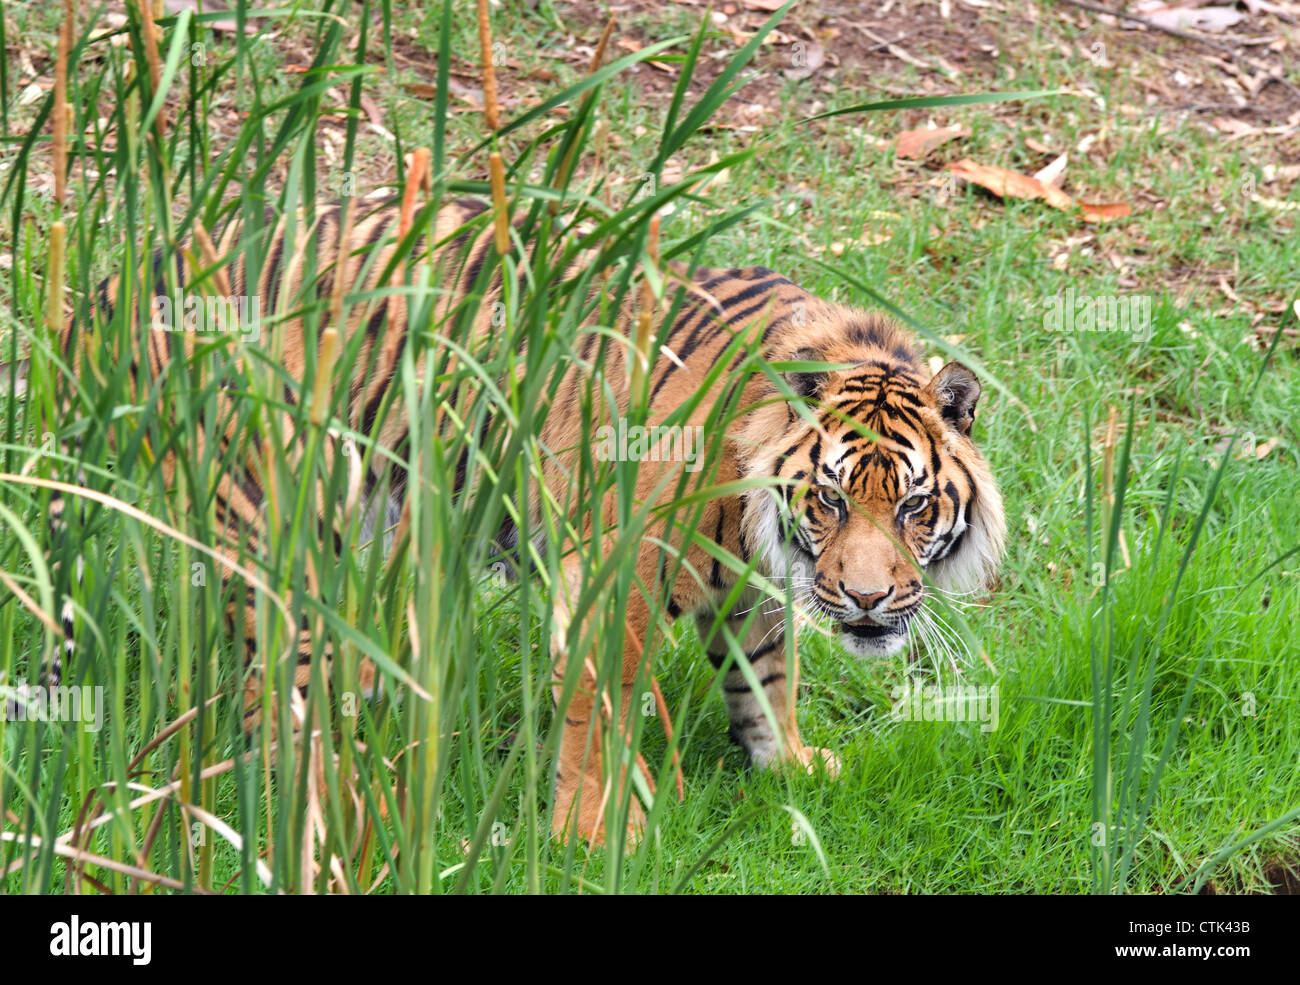 great image of a big male sumatran tiger Stock Photo